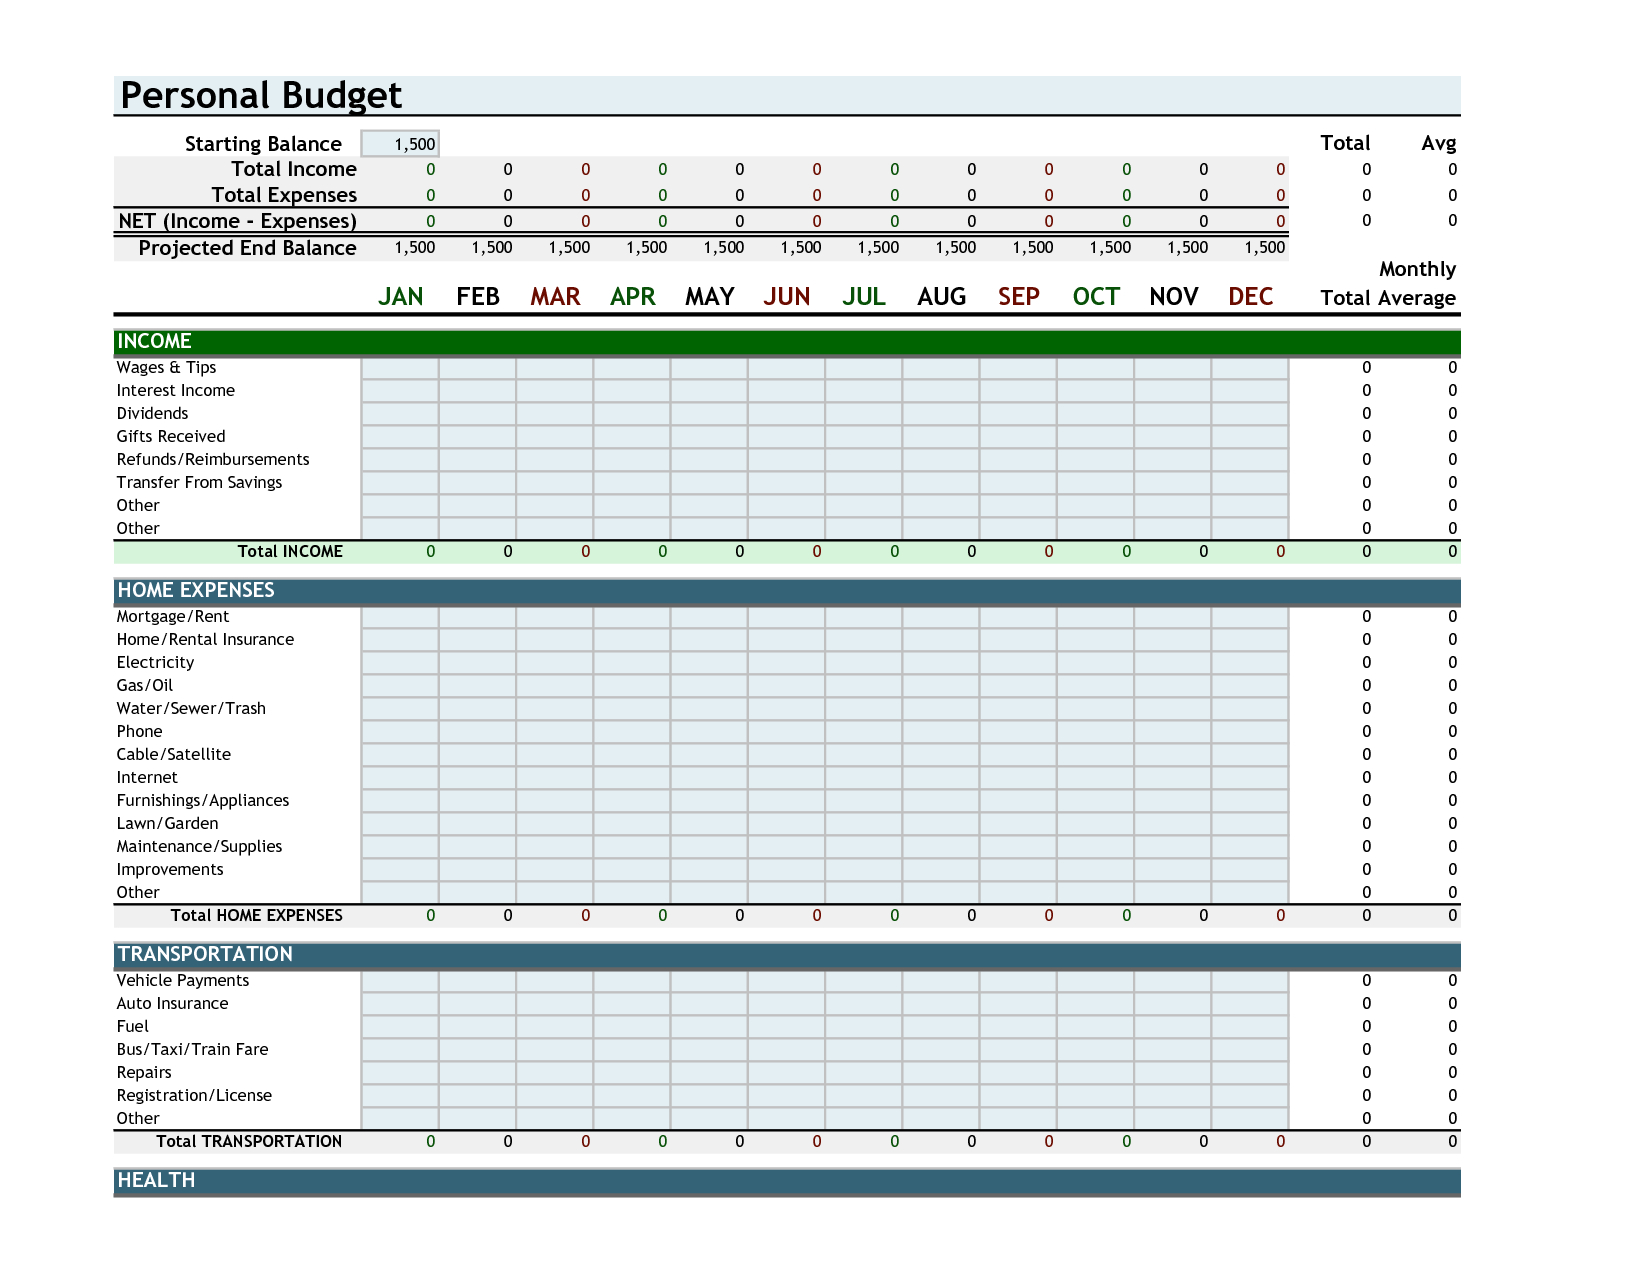 Personal Budget Excel Template Villeinfo